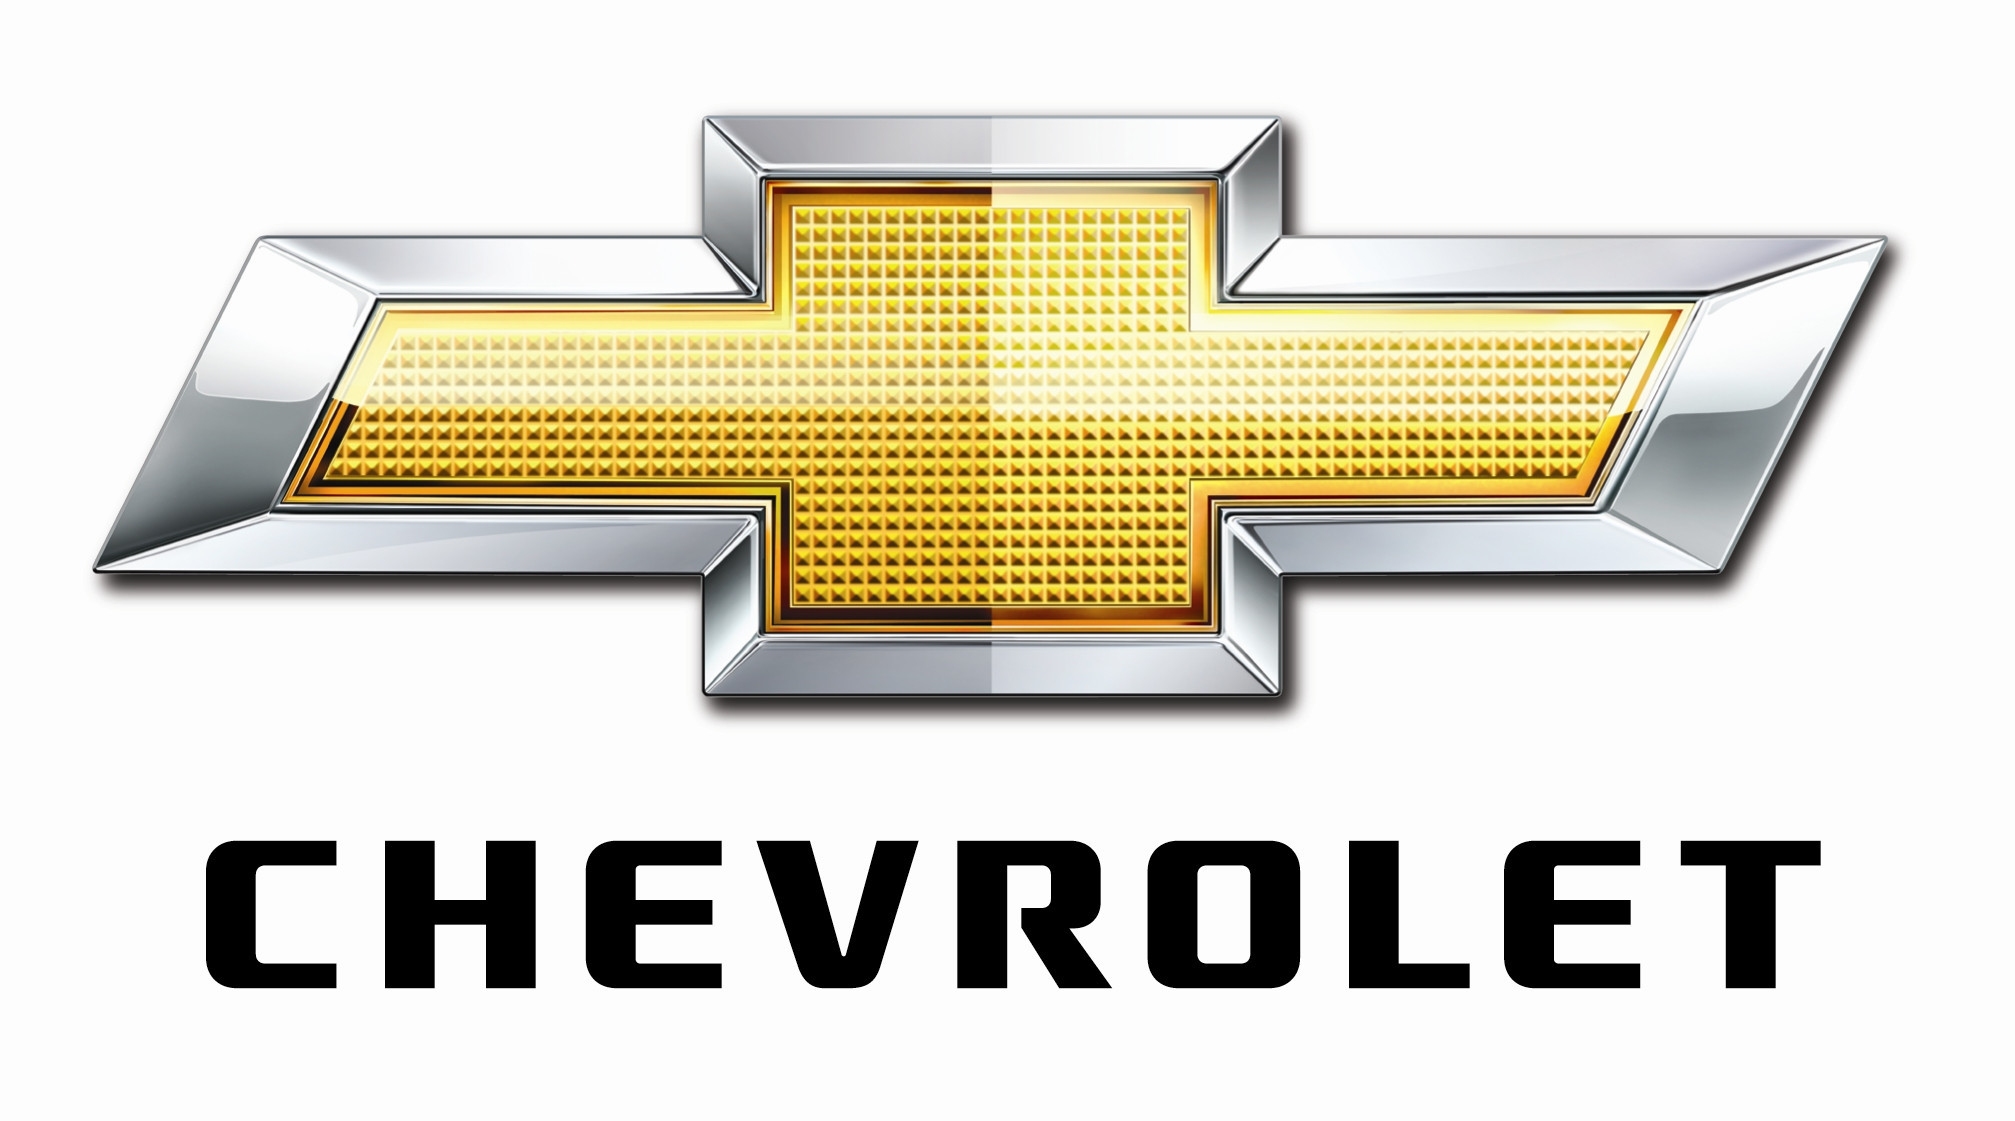 2015x1121 Chevy Logo Wallpaper Elegant Chevrolet Silverado 2014 Rims Image 254